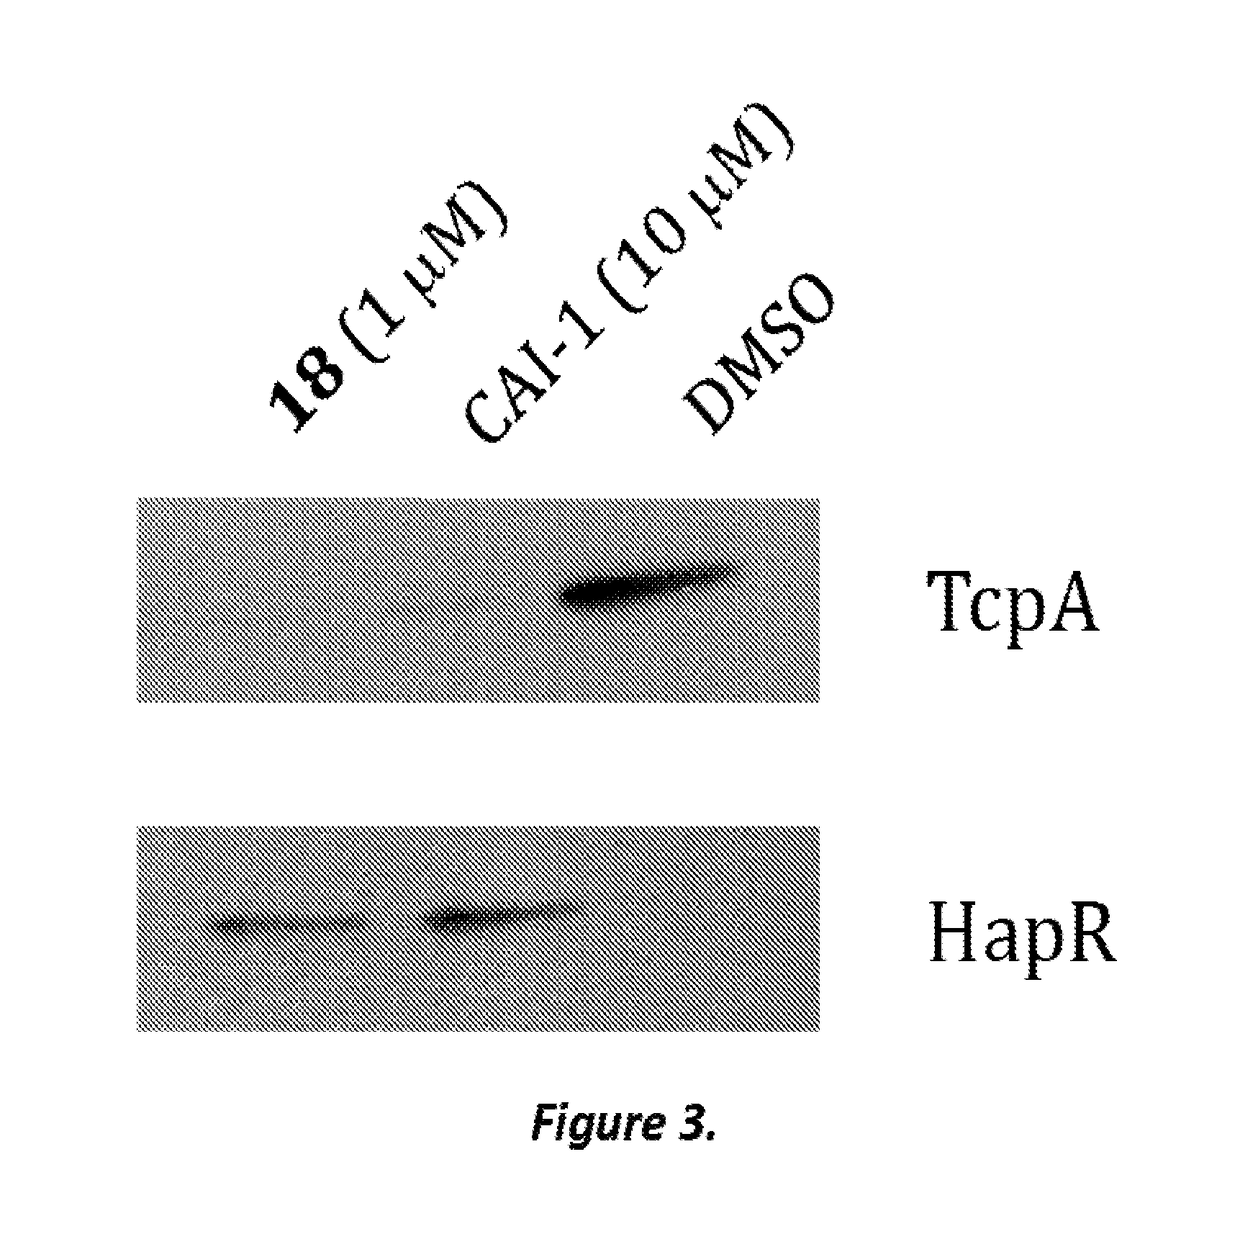 Heterocycle analogs of CAI-1 as agonists of quorum sensing in vibrio